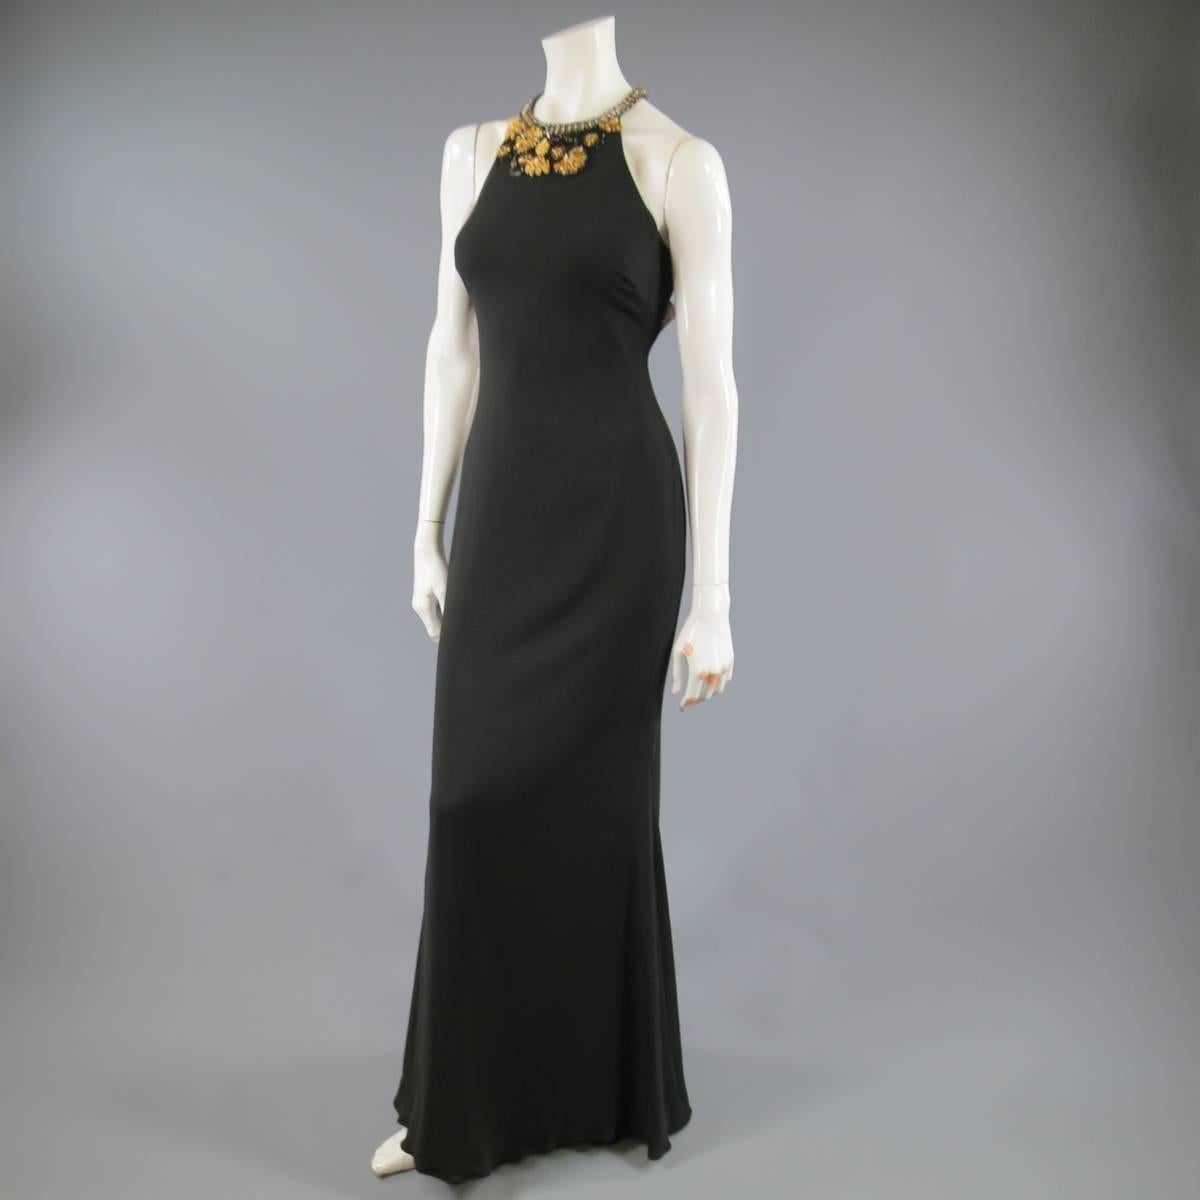 Women's BADGLEY MISCHKA Size 2 Black & Gold Floral Beaded Sleeveless Gown